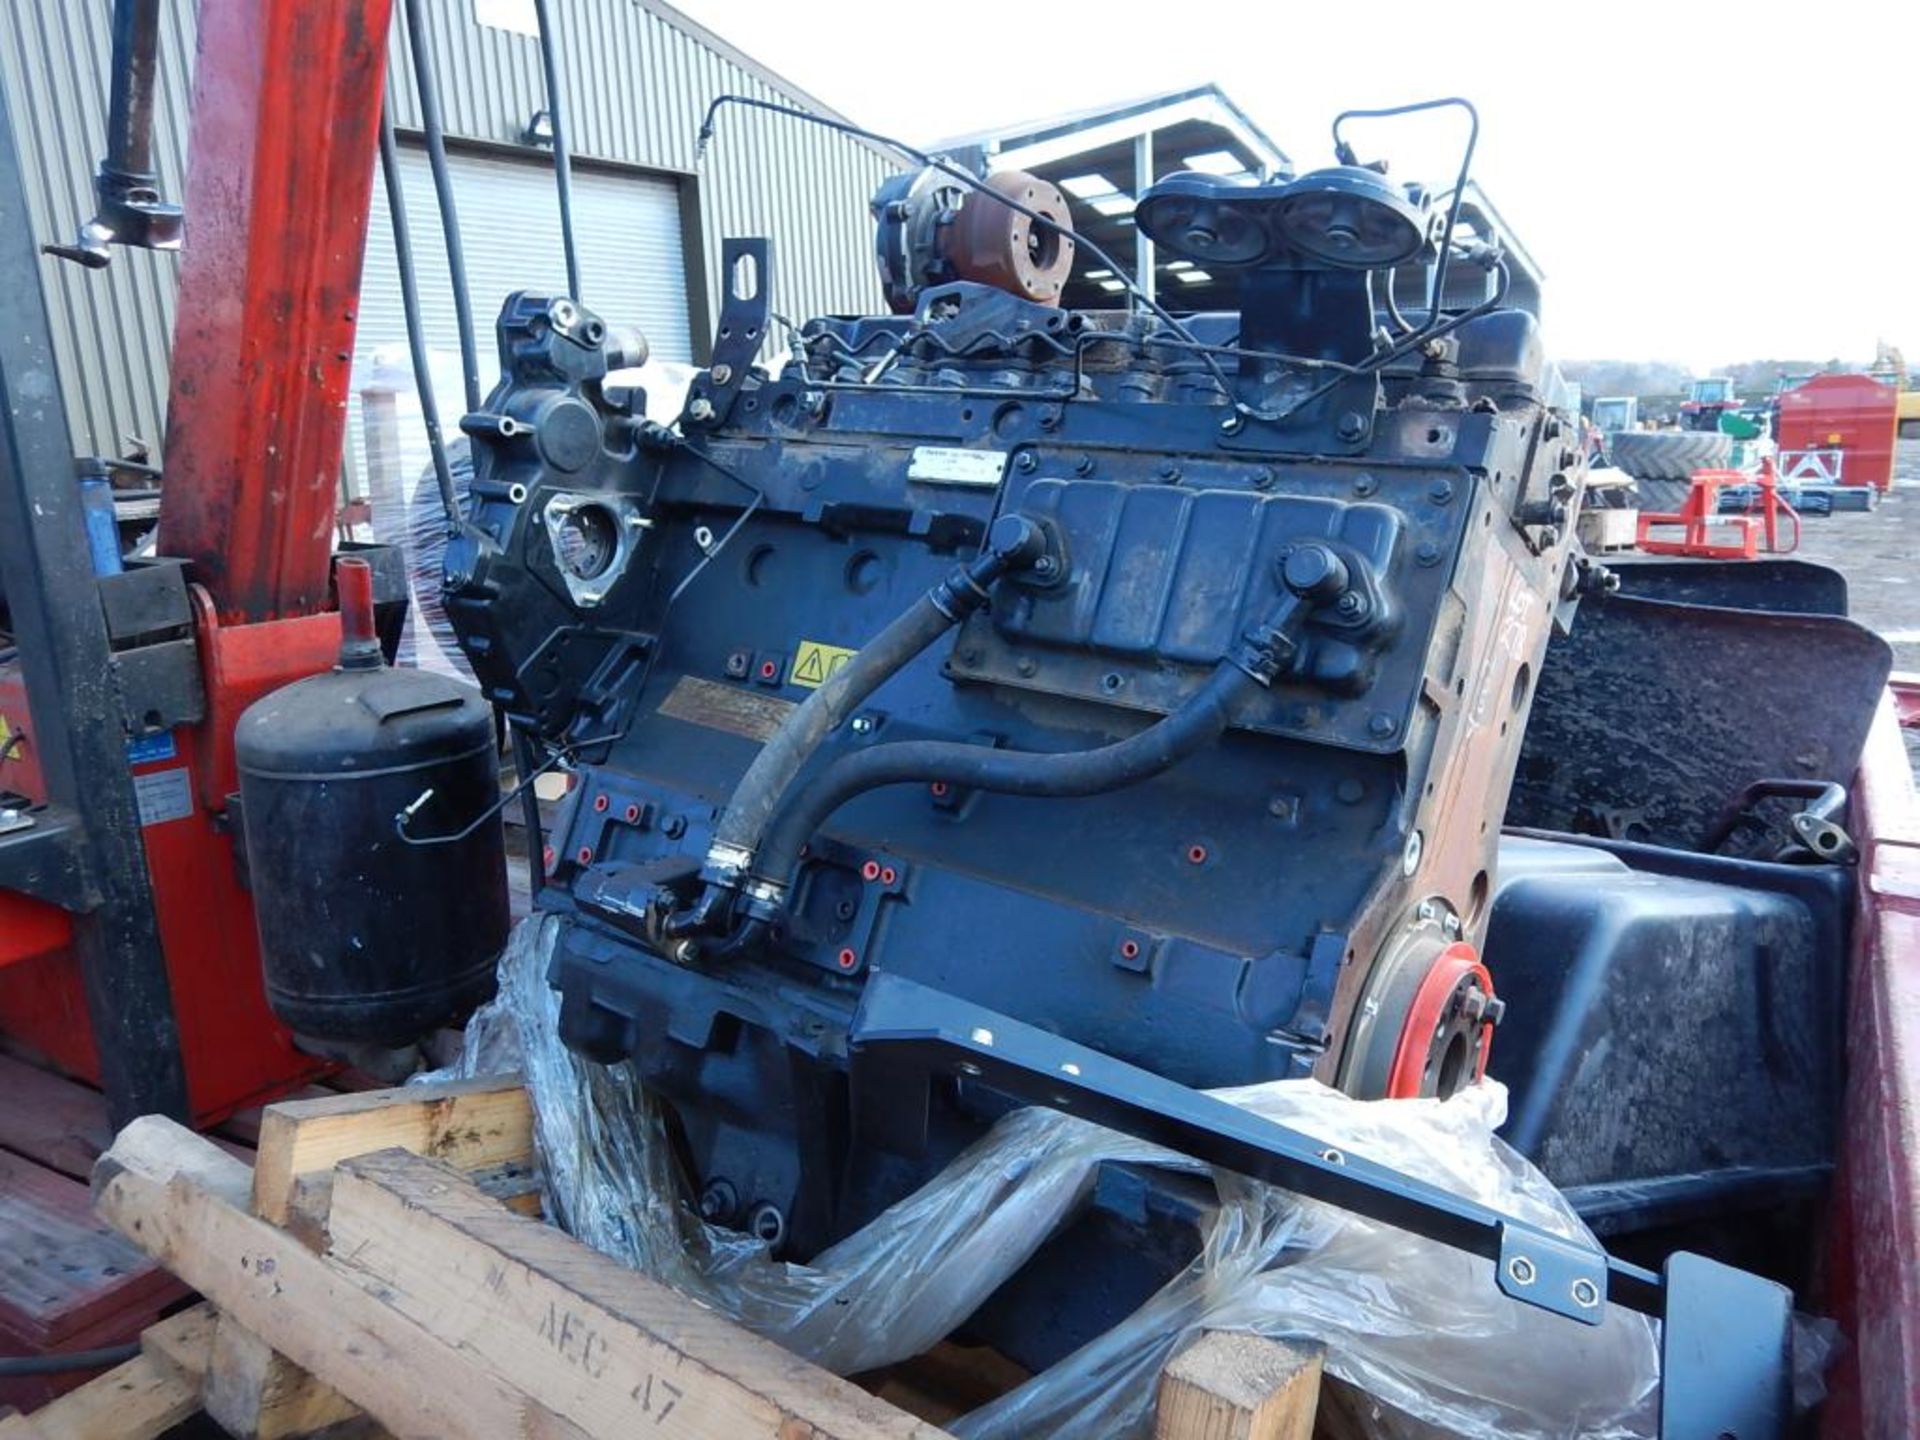 Massey Ferguson 6290 engine with accident damage to casting